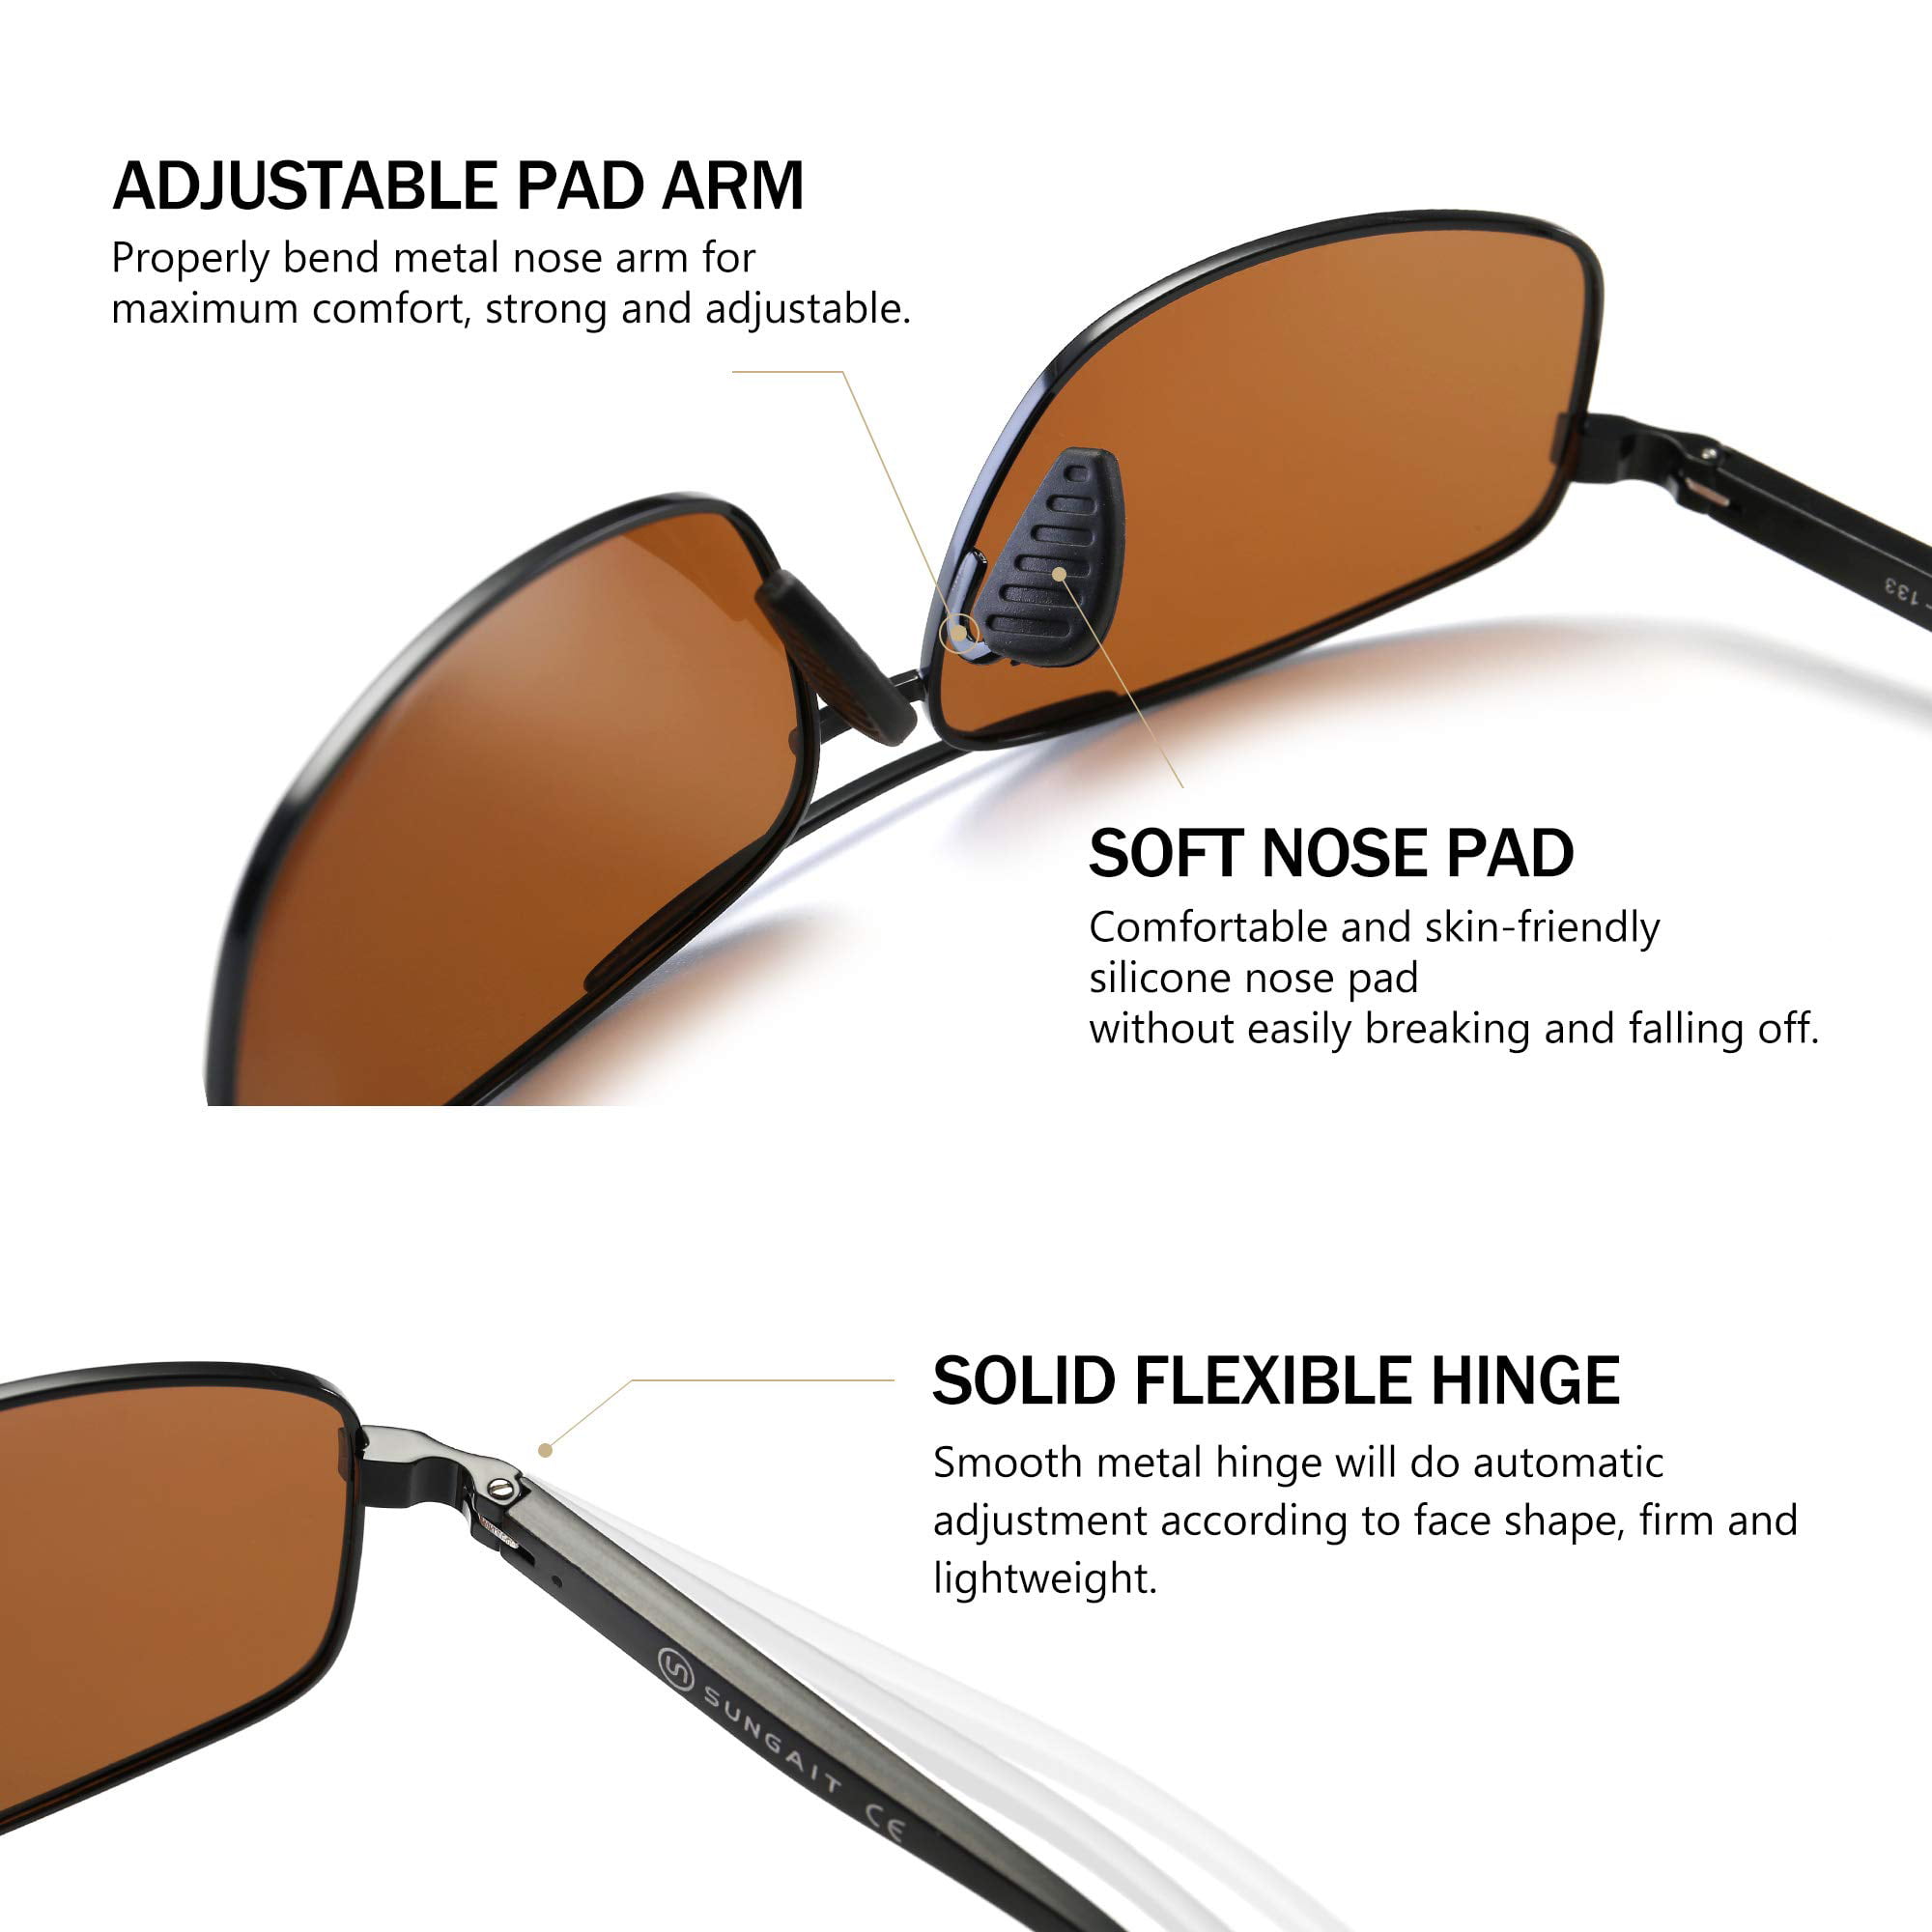 Ultra lightweight rectangular hd polarized sunglasses uv400 protection for  men women - b - c8197a